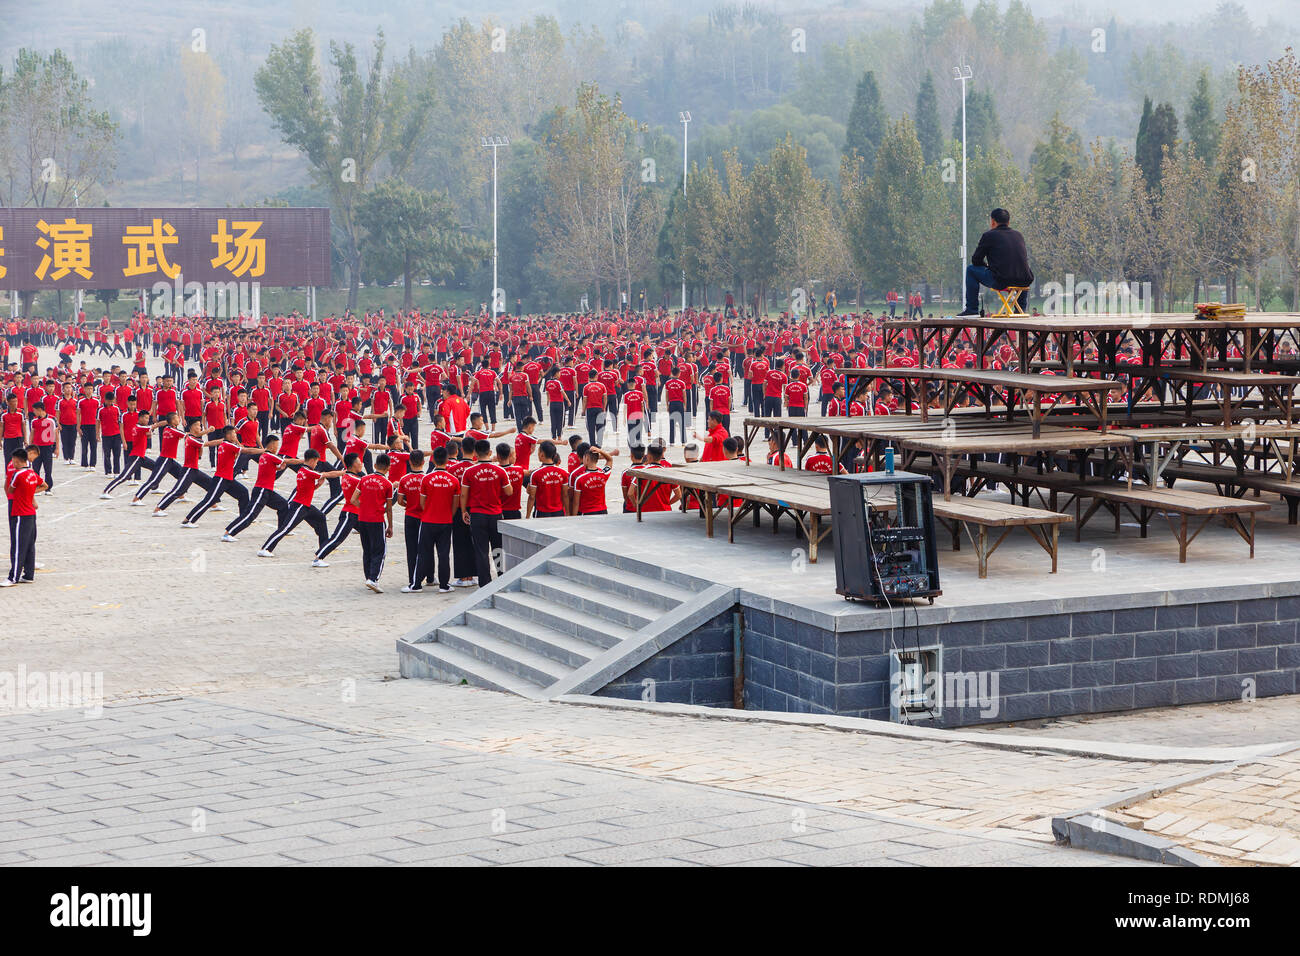 Dengfeng, China - Oktober 16, 2018: Mentor sieht aus wie Studenten sind in Martial Arts School auf dem Platz. Shaolin Tempel. Stockfoto